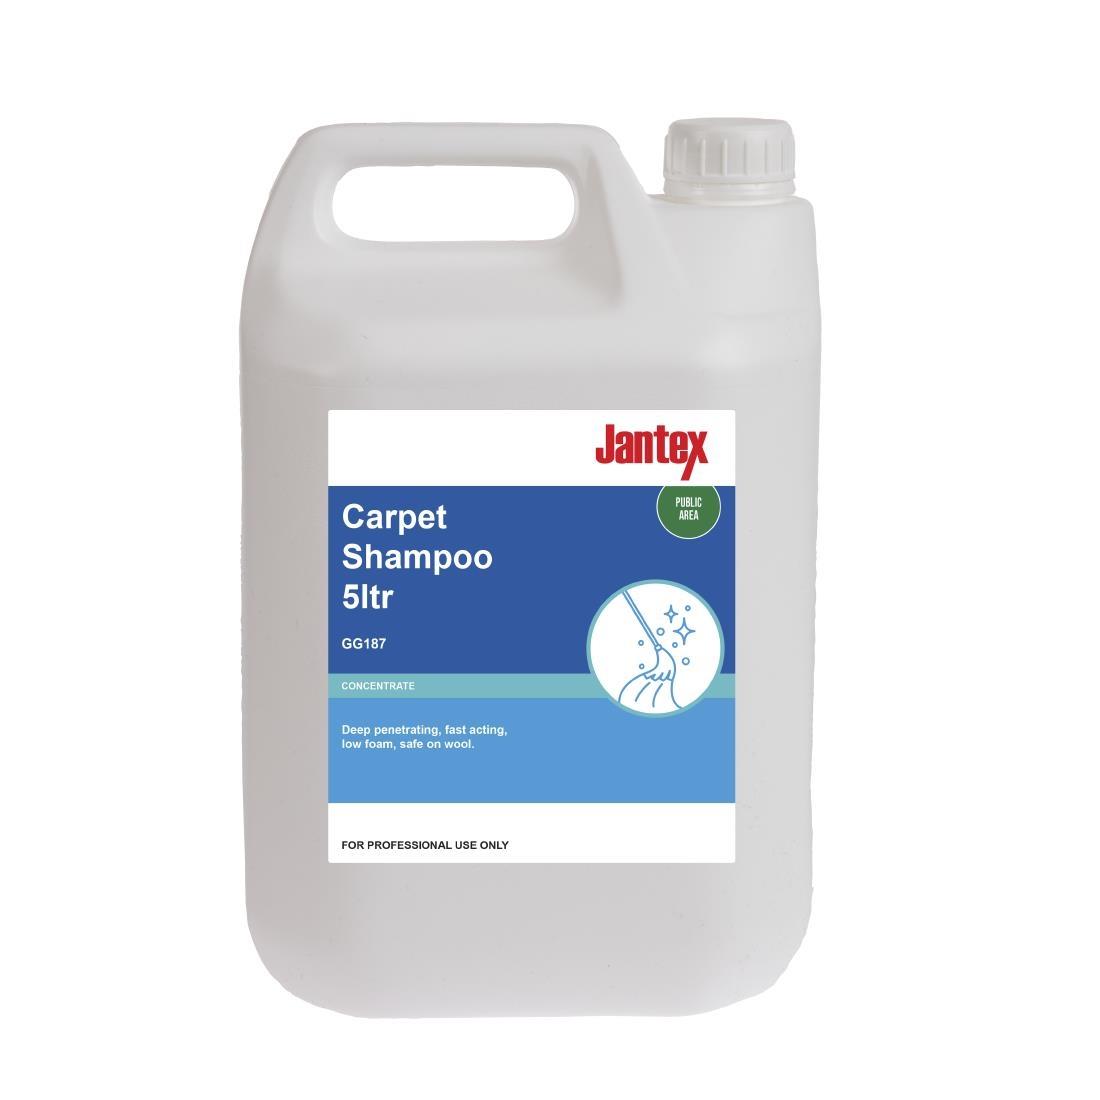 Jantex Carpet Shampoo Concentrate 5Ltr - GG187  - 1